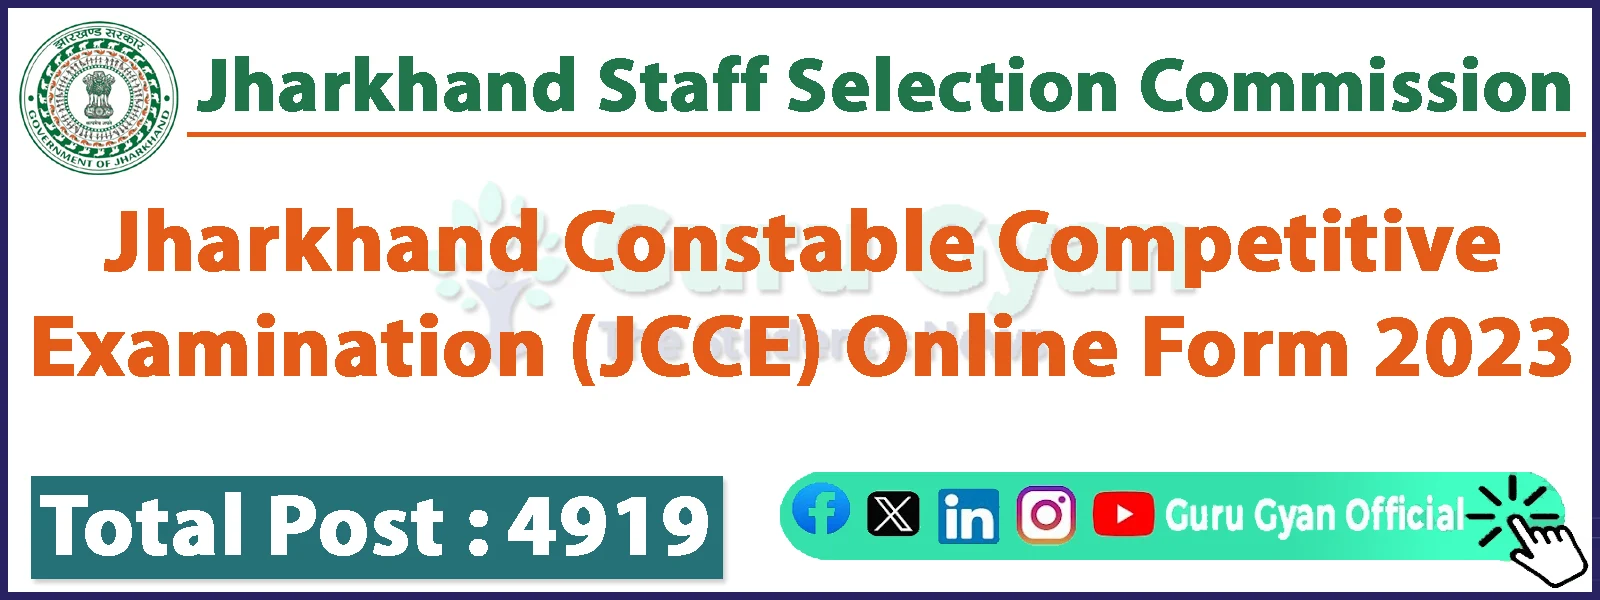 Jharkhand JSSC Constable Online Form 2024